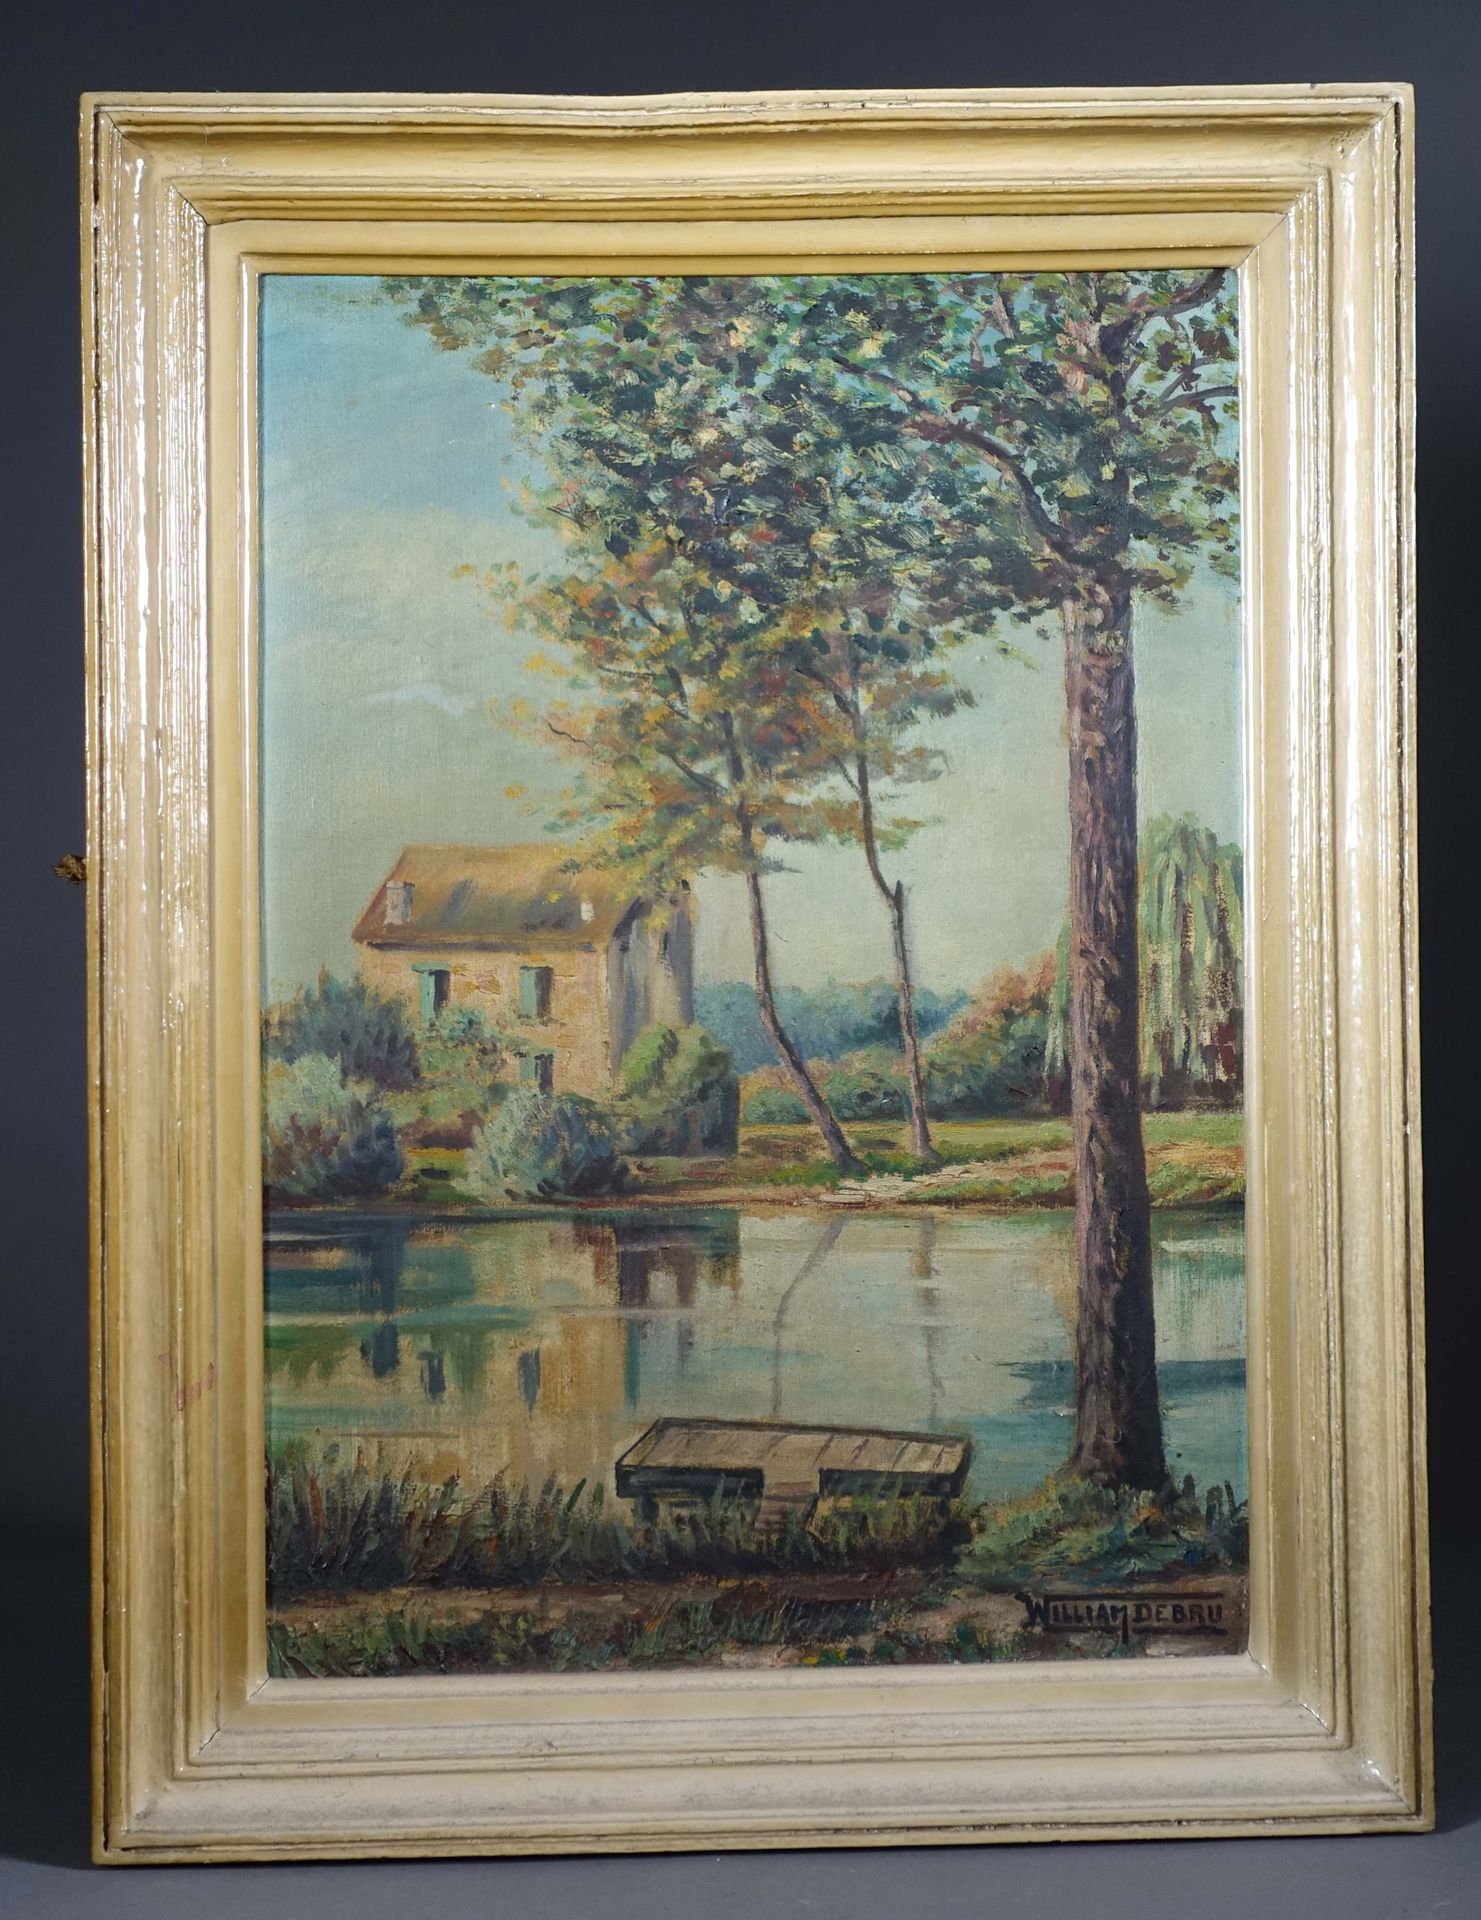 Null William DEBRU (siglo XX)
El estanque
Óleo sobre lienzo. 
46 x 34 cm
(baguet&hellip;